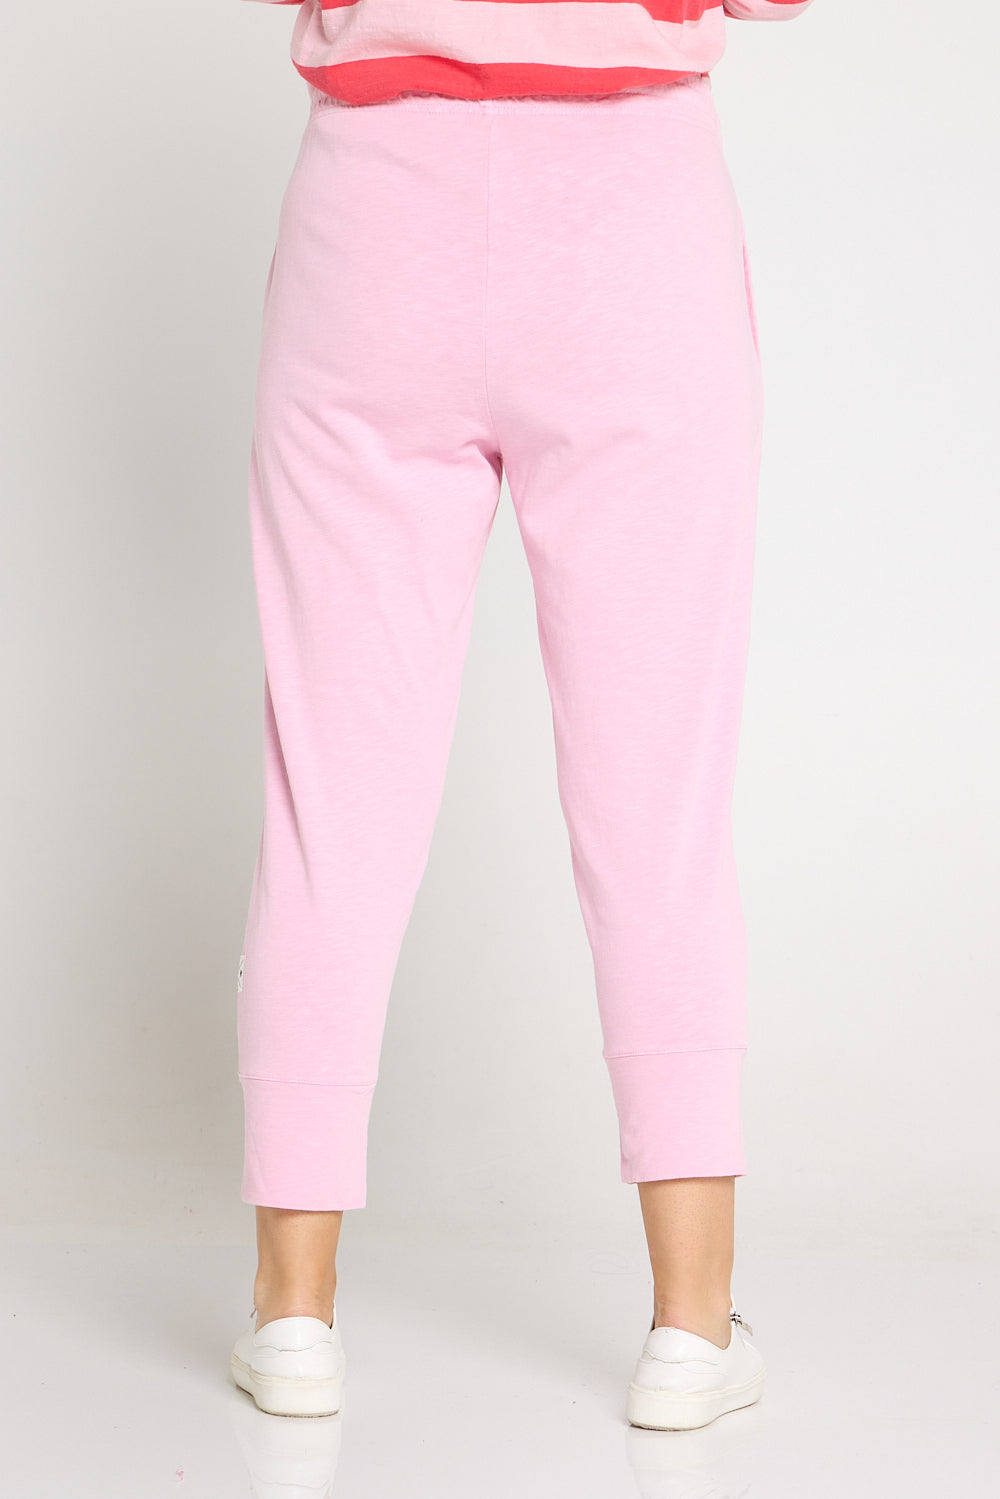 Brunch Pants - Splendid Pink